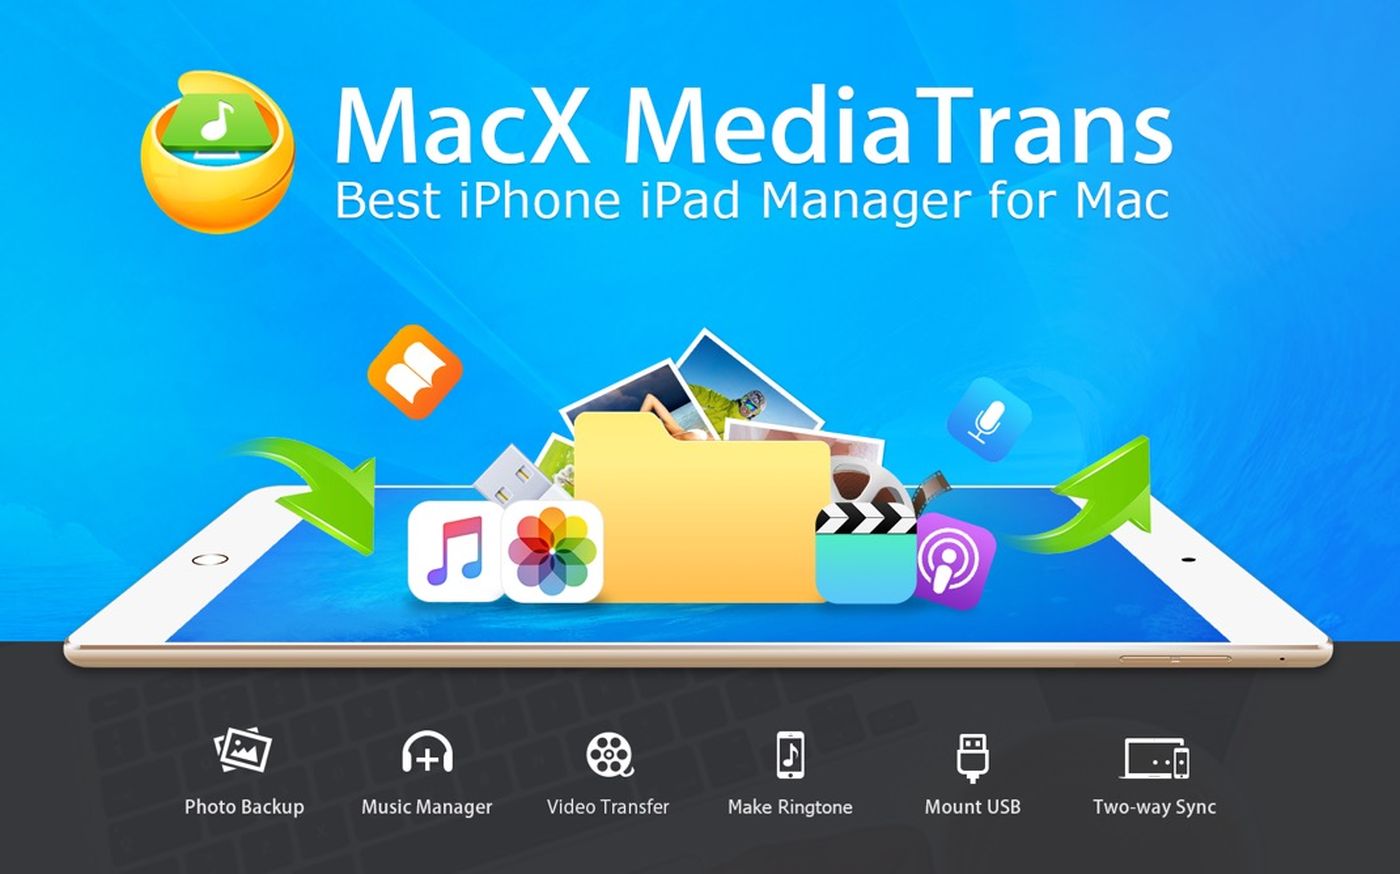 macx mediatrans alternative